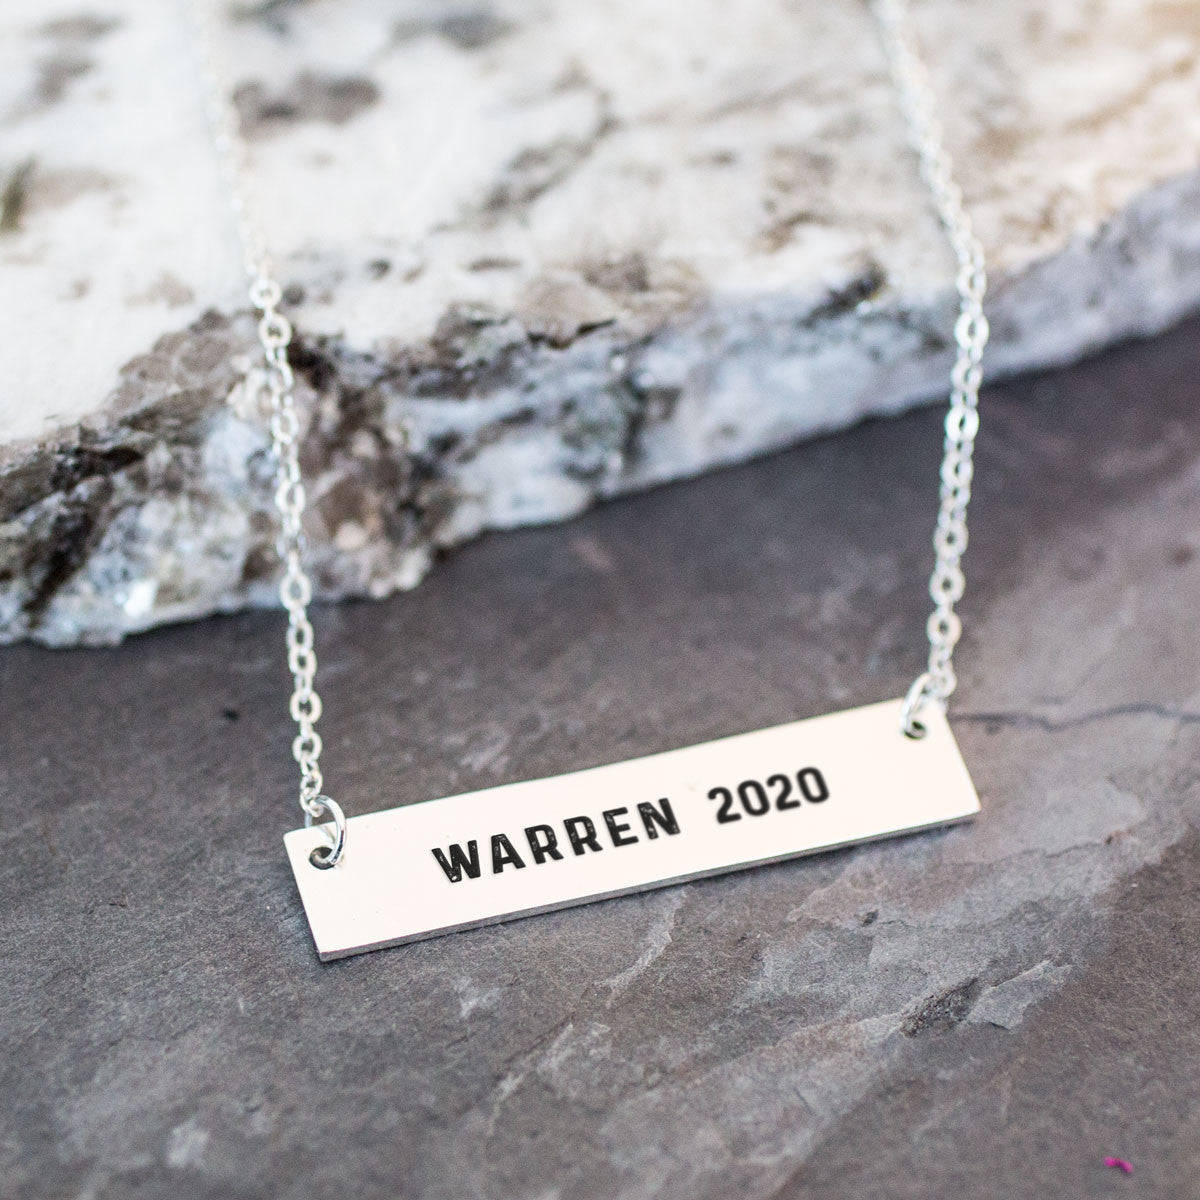 Warren 2020 Gold / Silver Bar Necklace - pipercleo.com